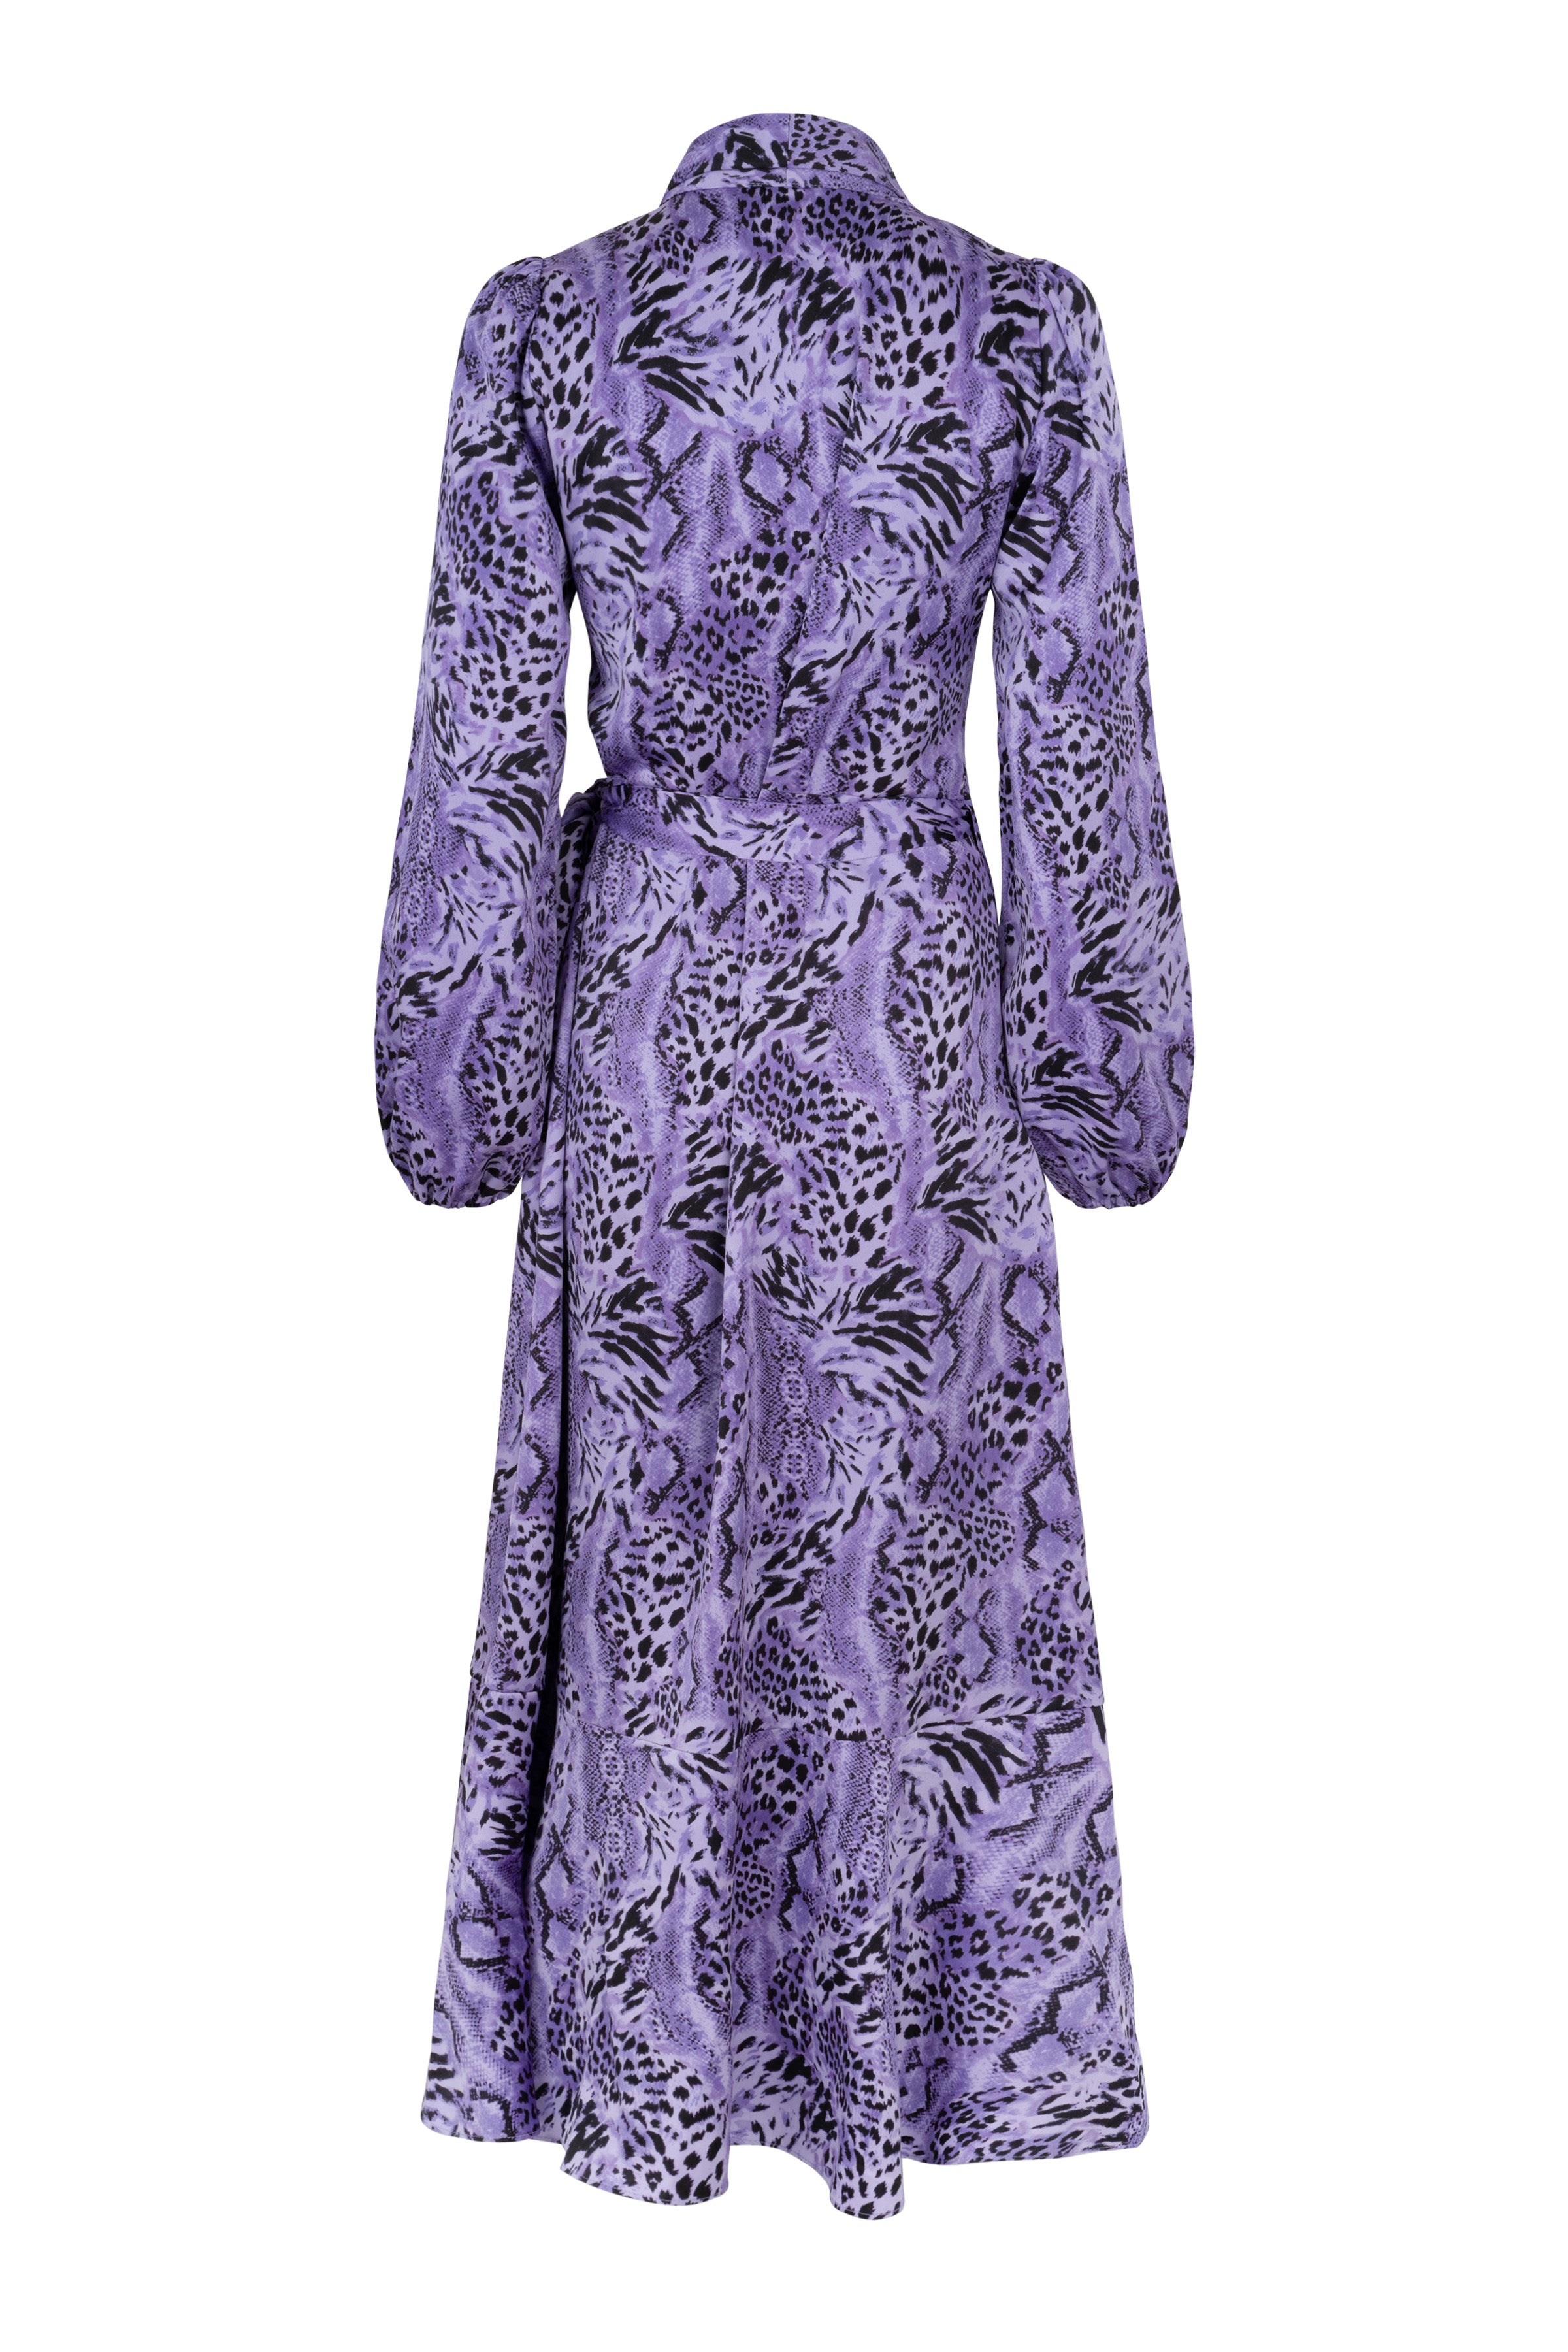 CRAS Lara Dress Dress 8005 Wild Lavender